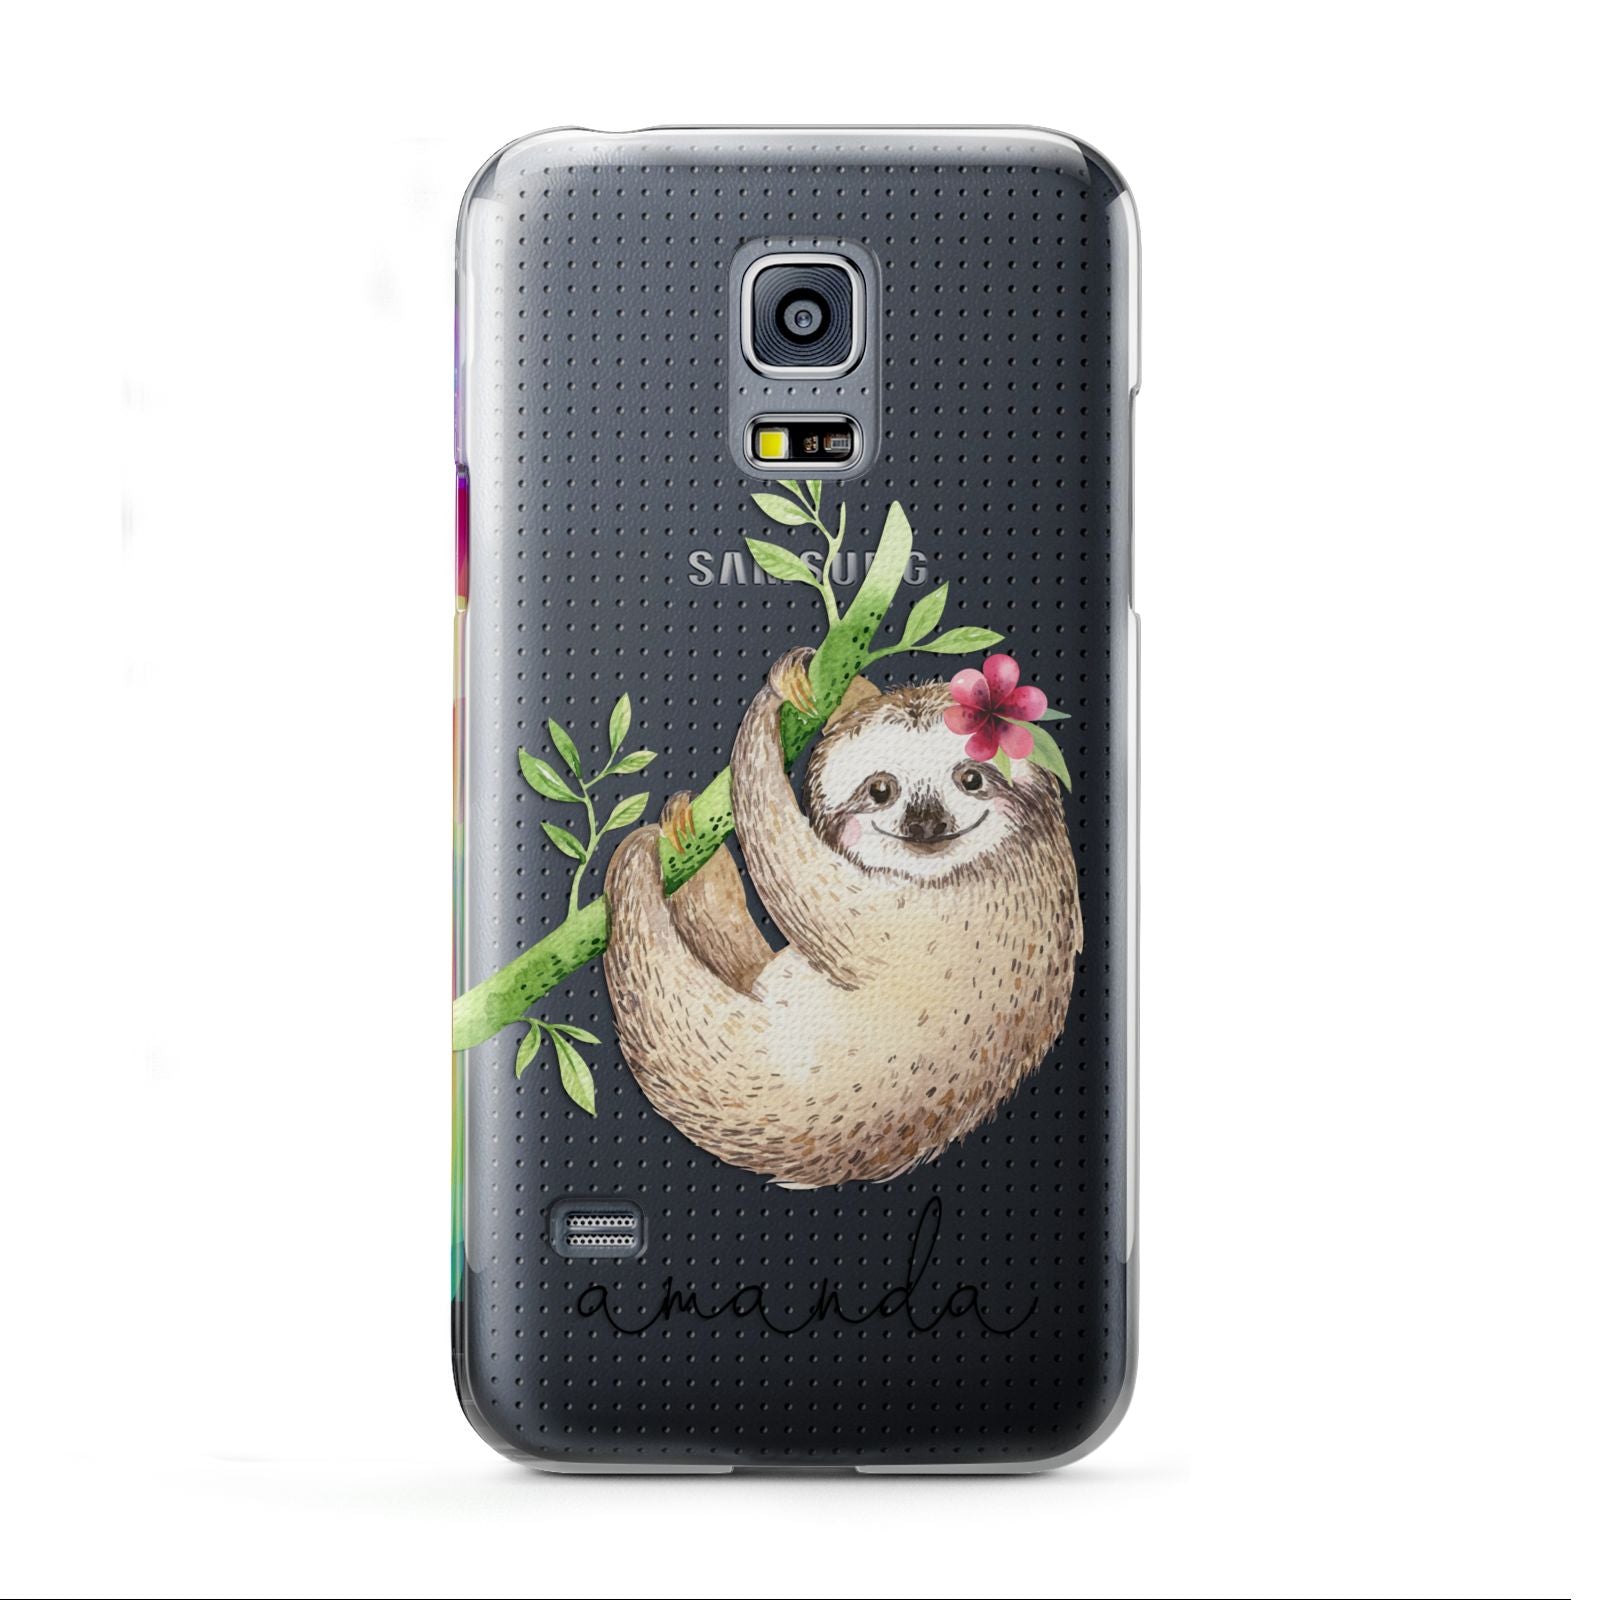 Personalised Sloth Samsung Galaxy S5 Mini Case